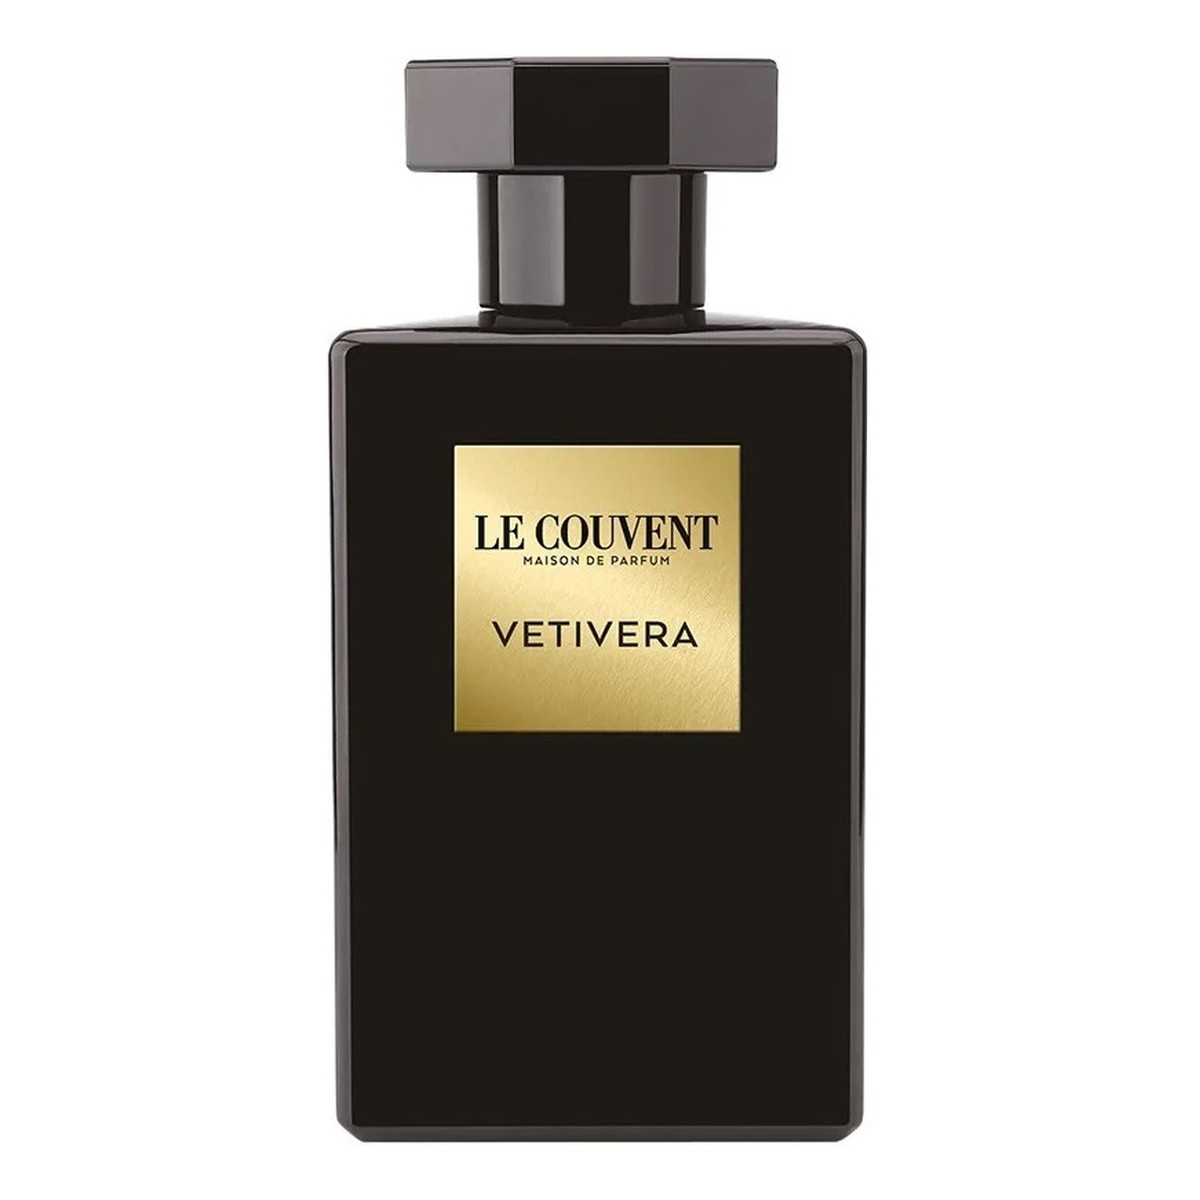 Le Couvent Vetivera Perfumy spray 100ml